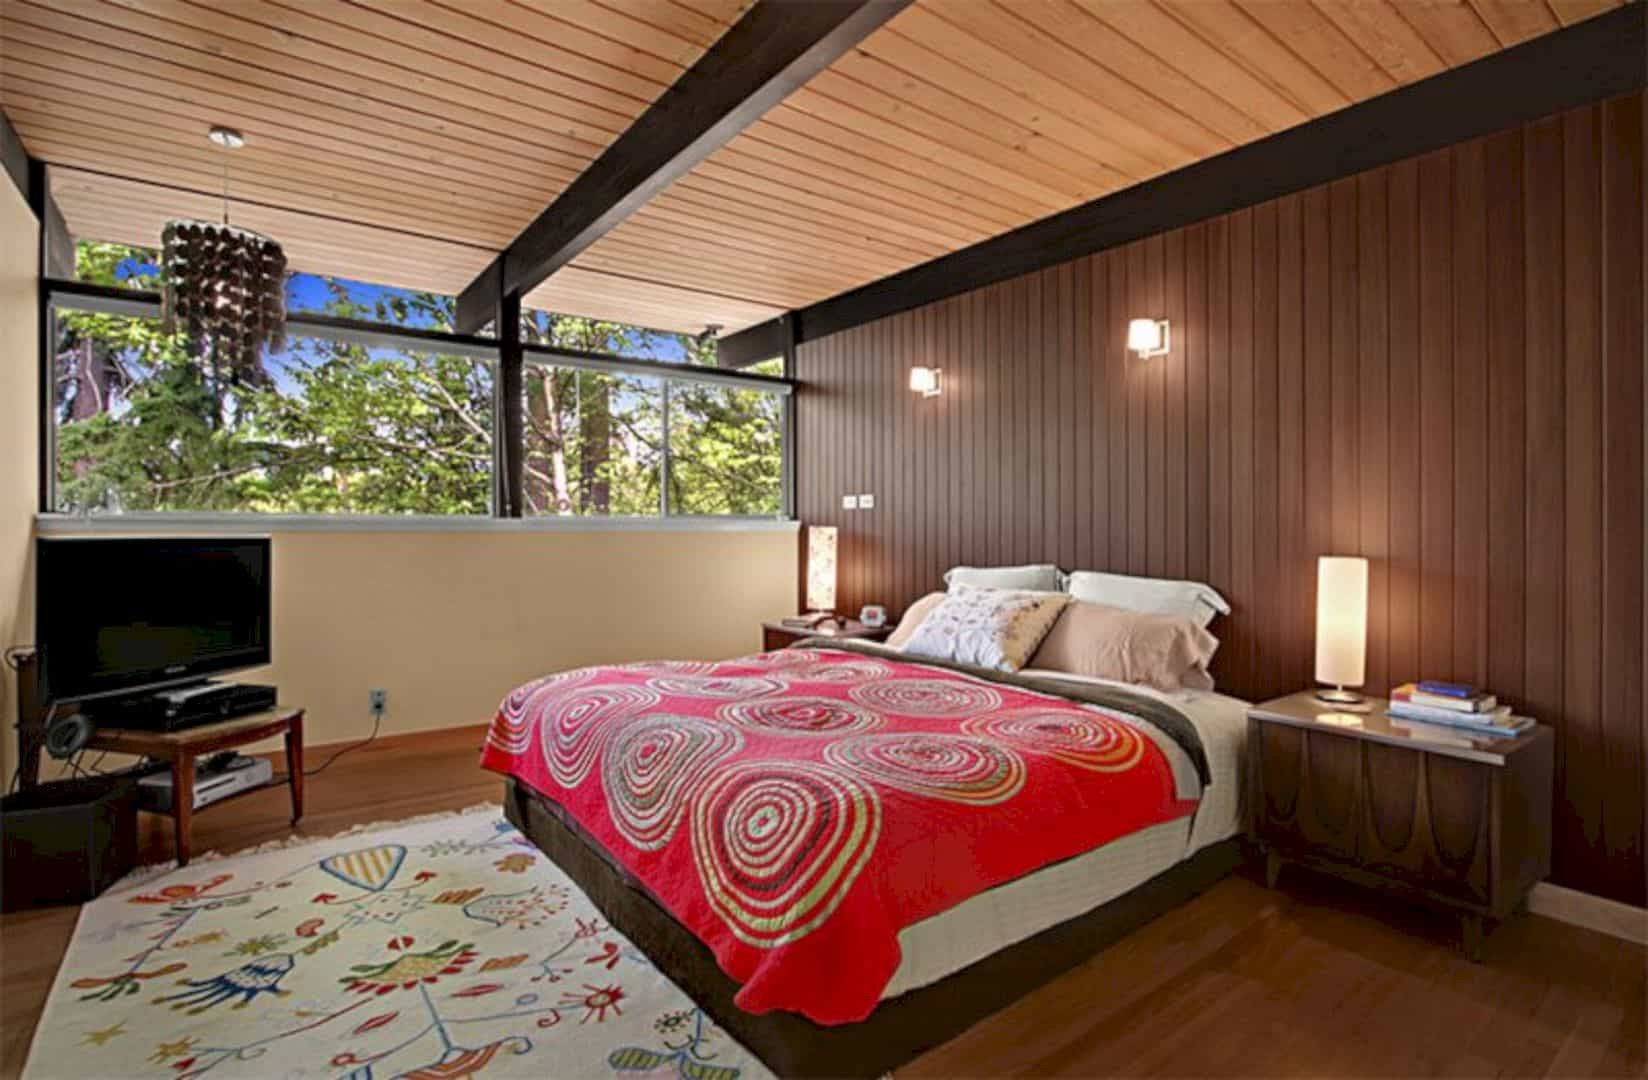 Mid Century Modern Bedroom Ideas
 17 Remarkable Mid century Modern Bedroom Designs